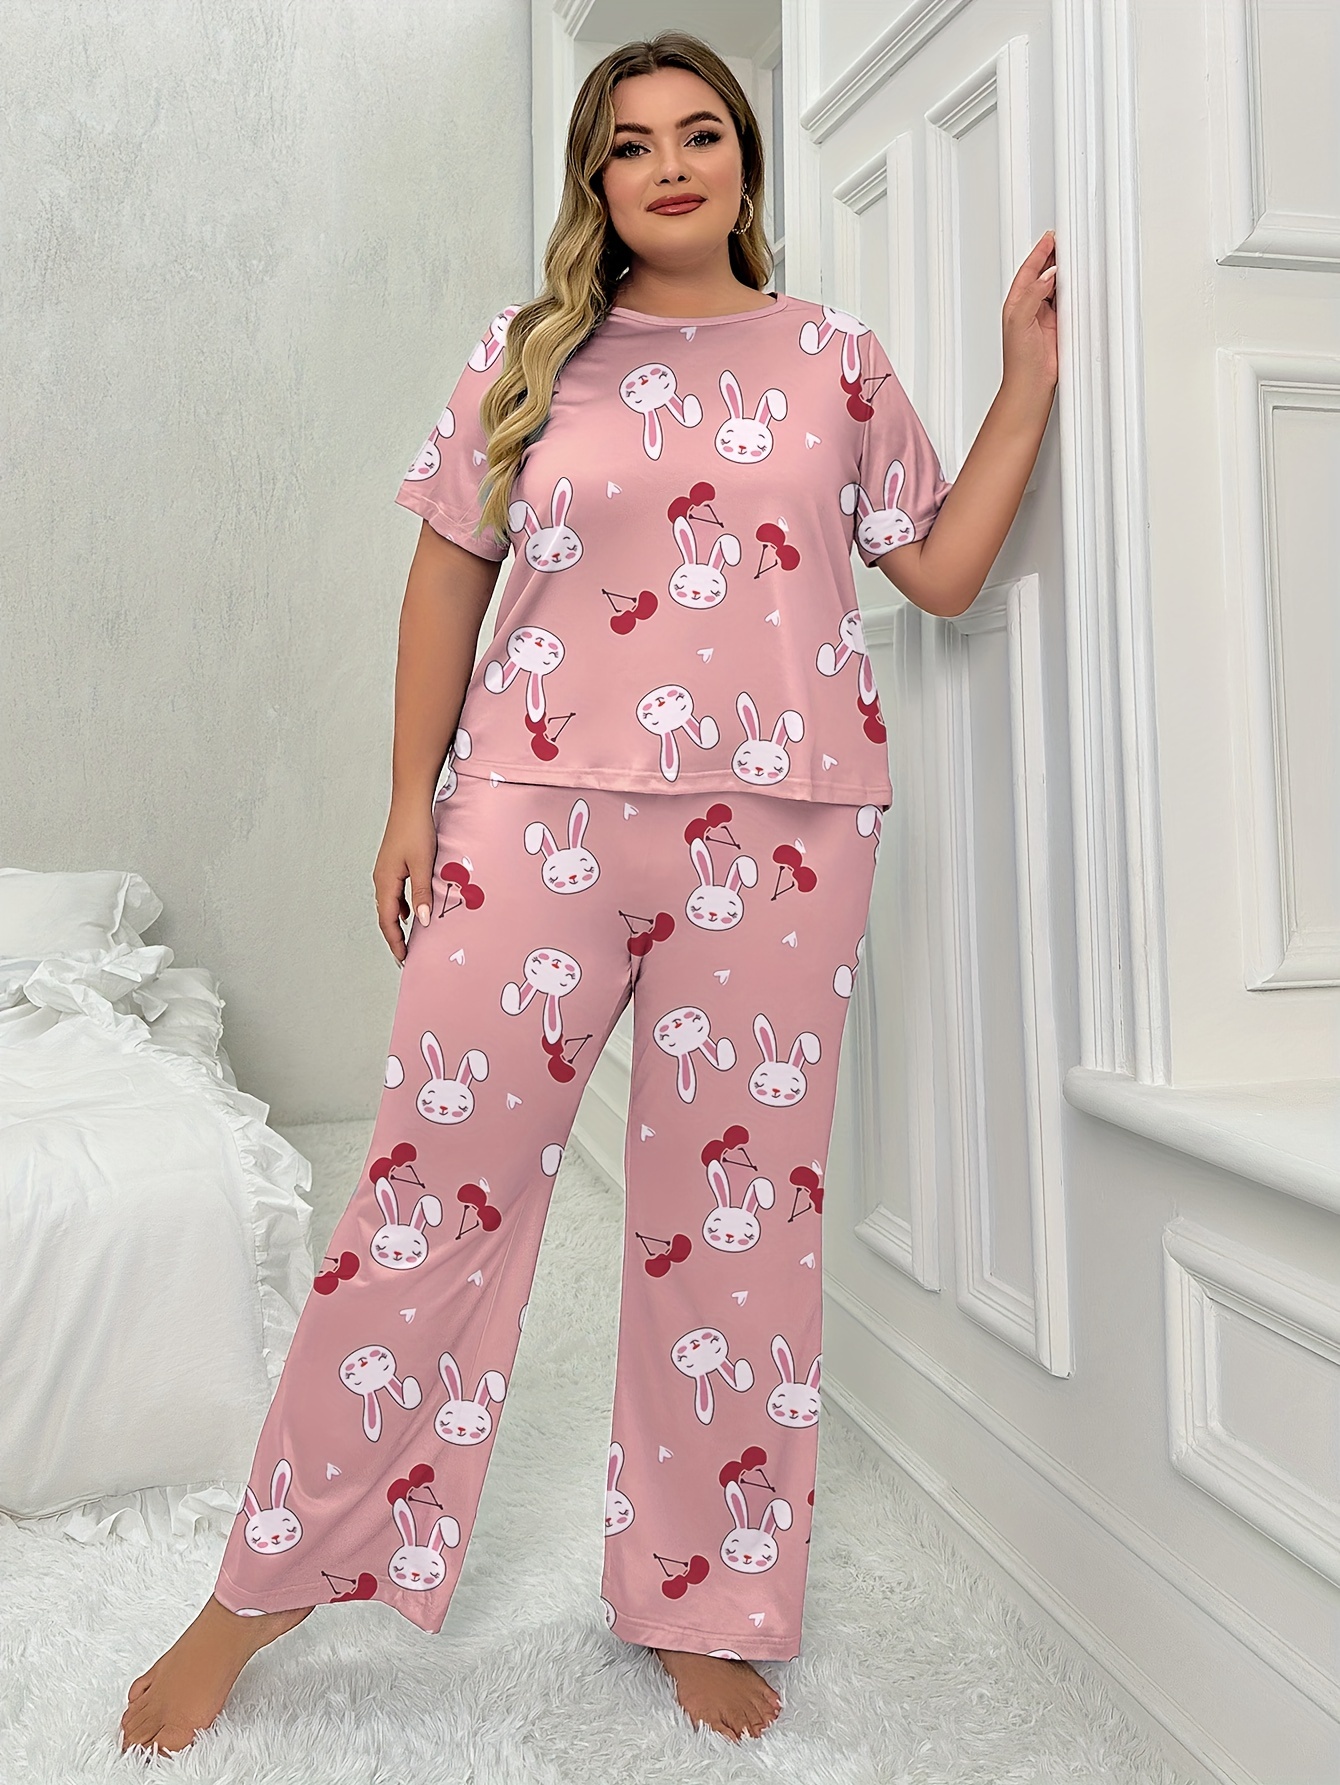 Kawaii Cherries Women's Pajama Pants, Pink With Many Cherries and